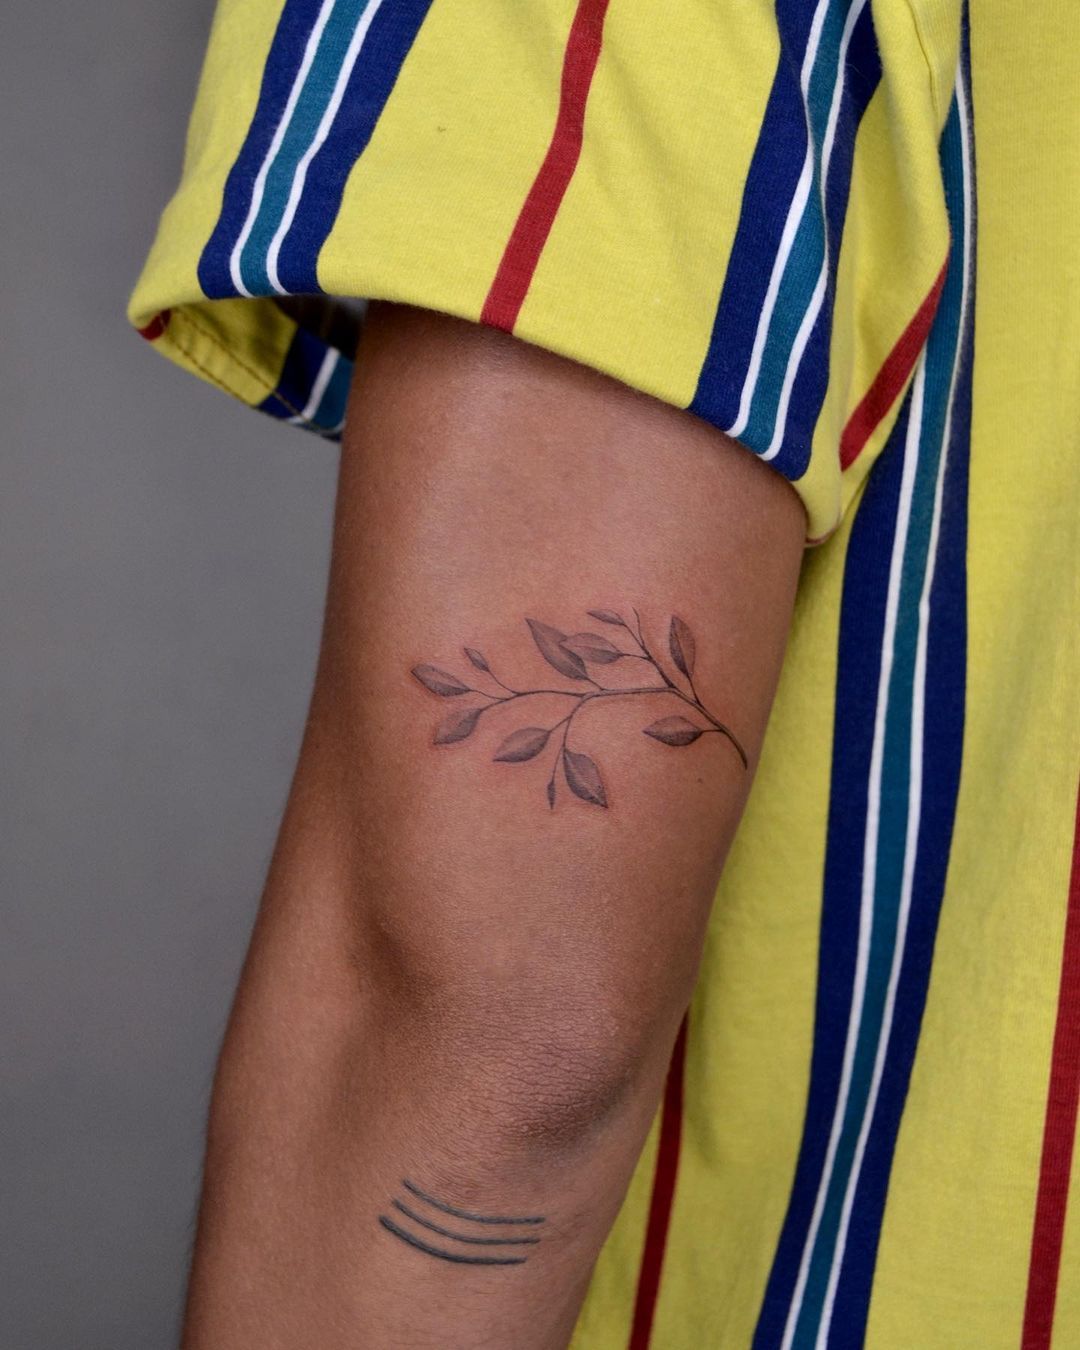 My new tattoo | Birch tree branches | Erin Duffey | Flickr